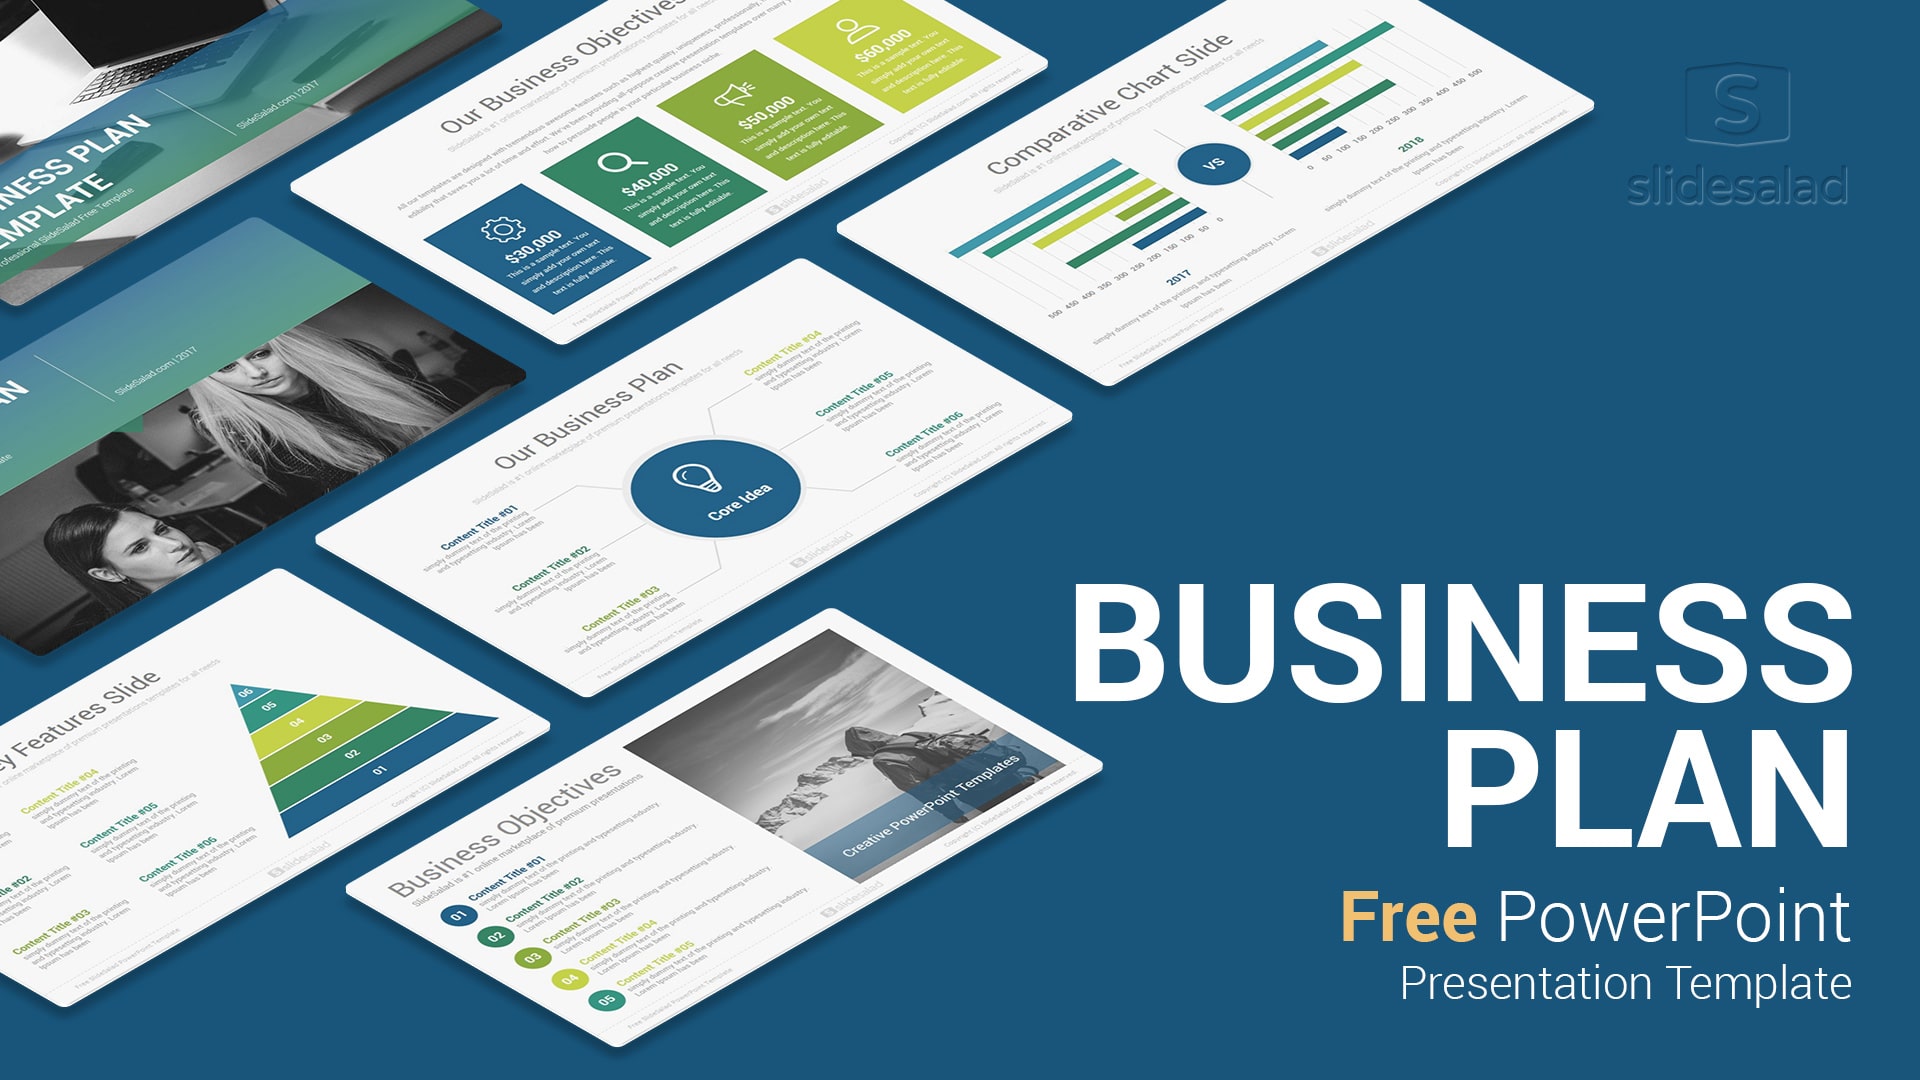 Business Plan Free PowerPoint Presentation Template - SlideSalad With Free Powerpoint Presentation Templates Downloads